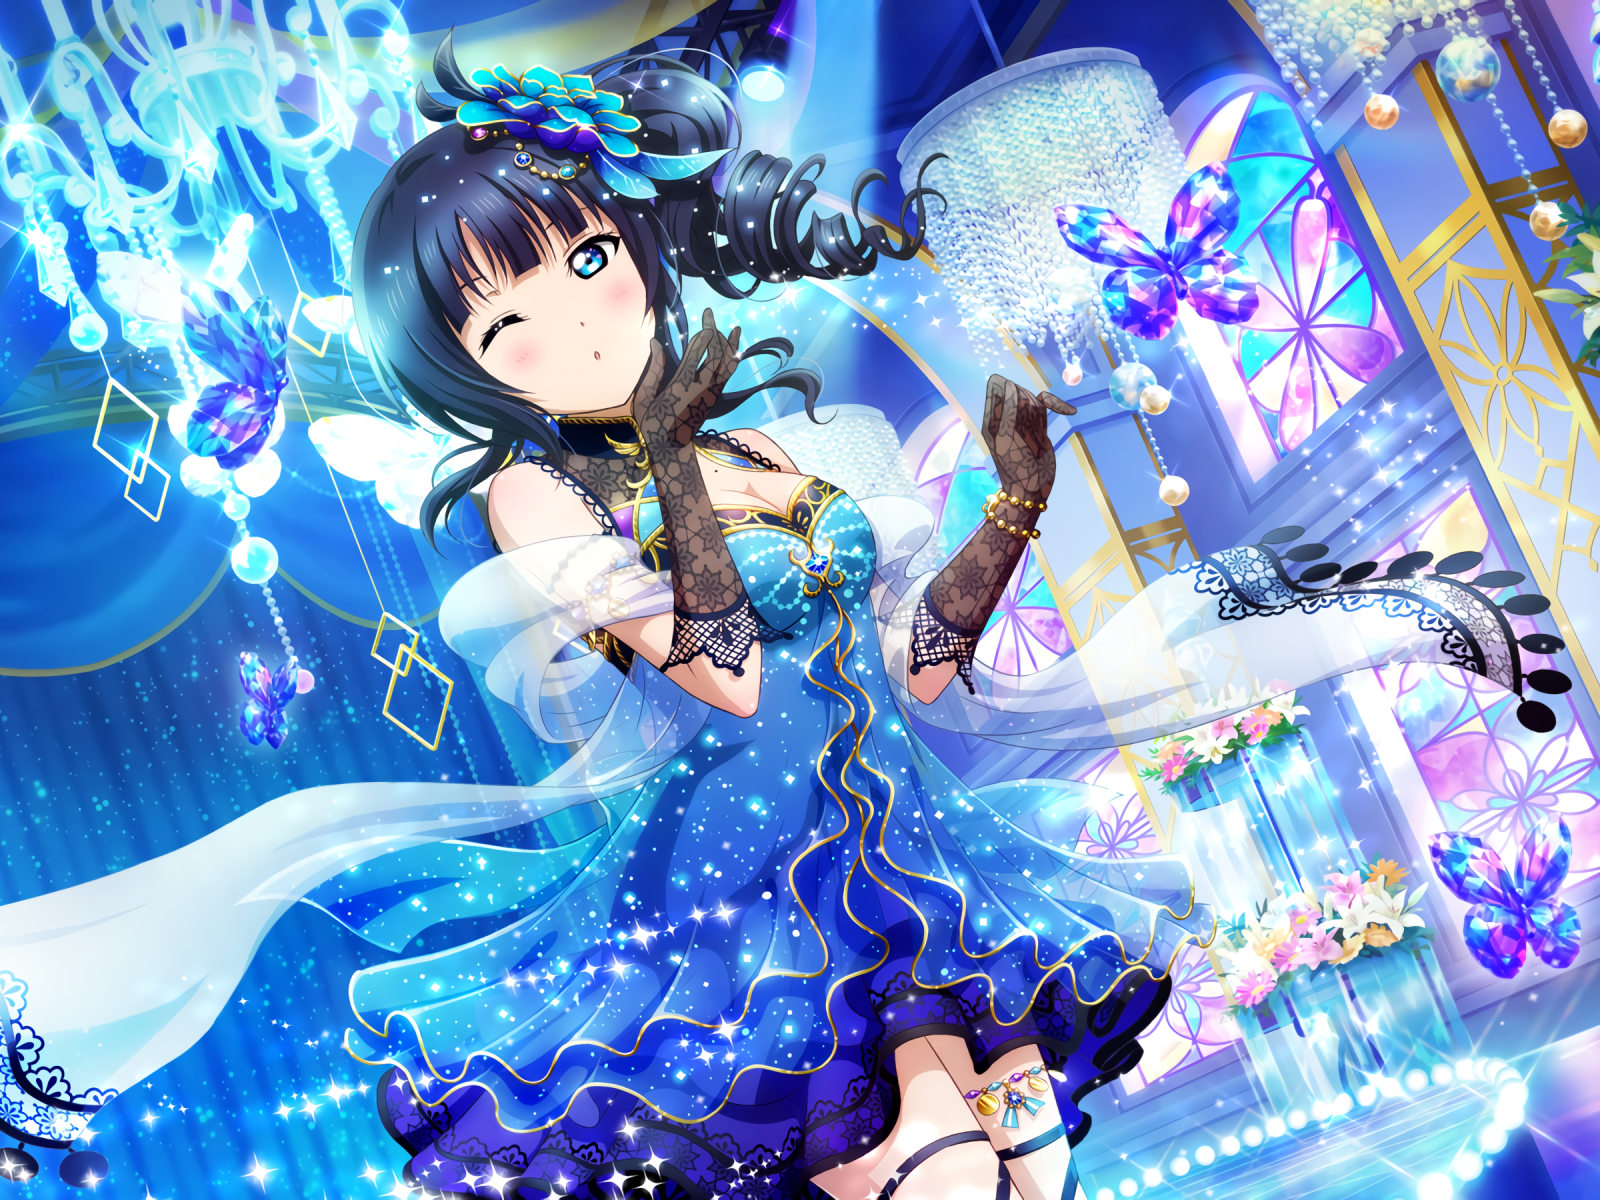 Anime girl in a beautiful blue dress